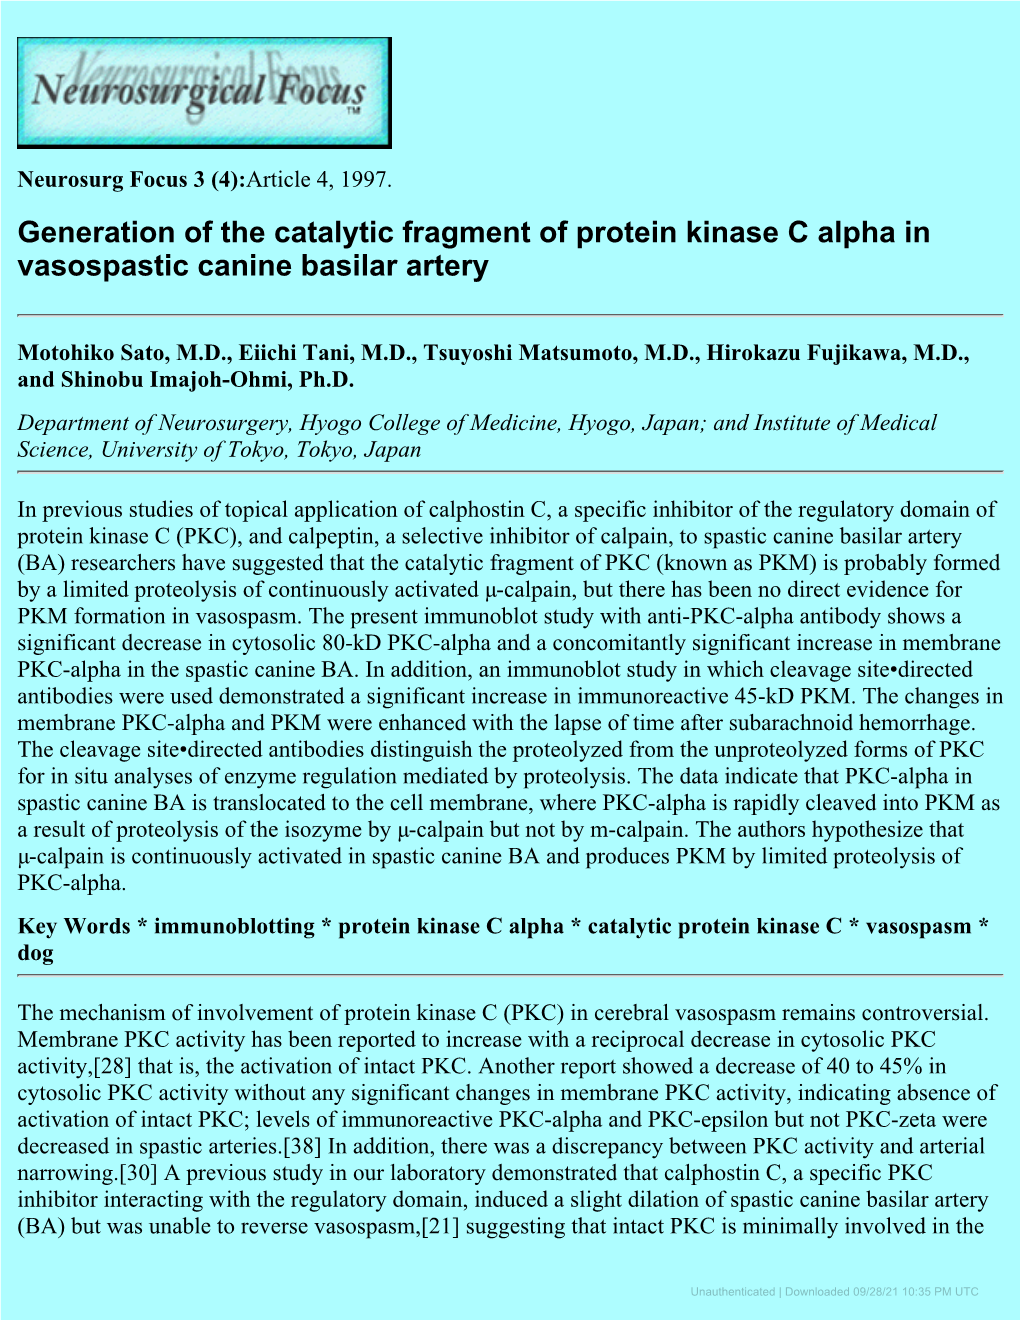 Generation of the Catalytic Fragment of Protein Kinase C Alpha in Vasospastic Canine Basilar Artery